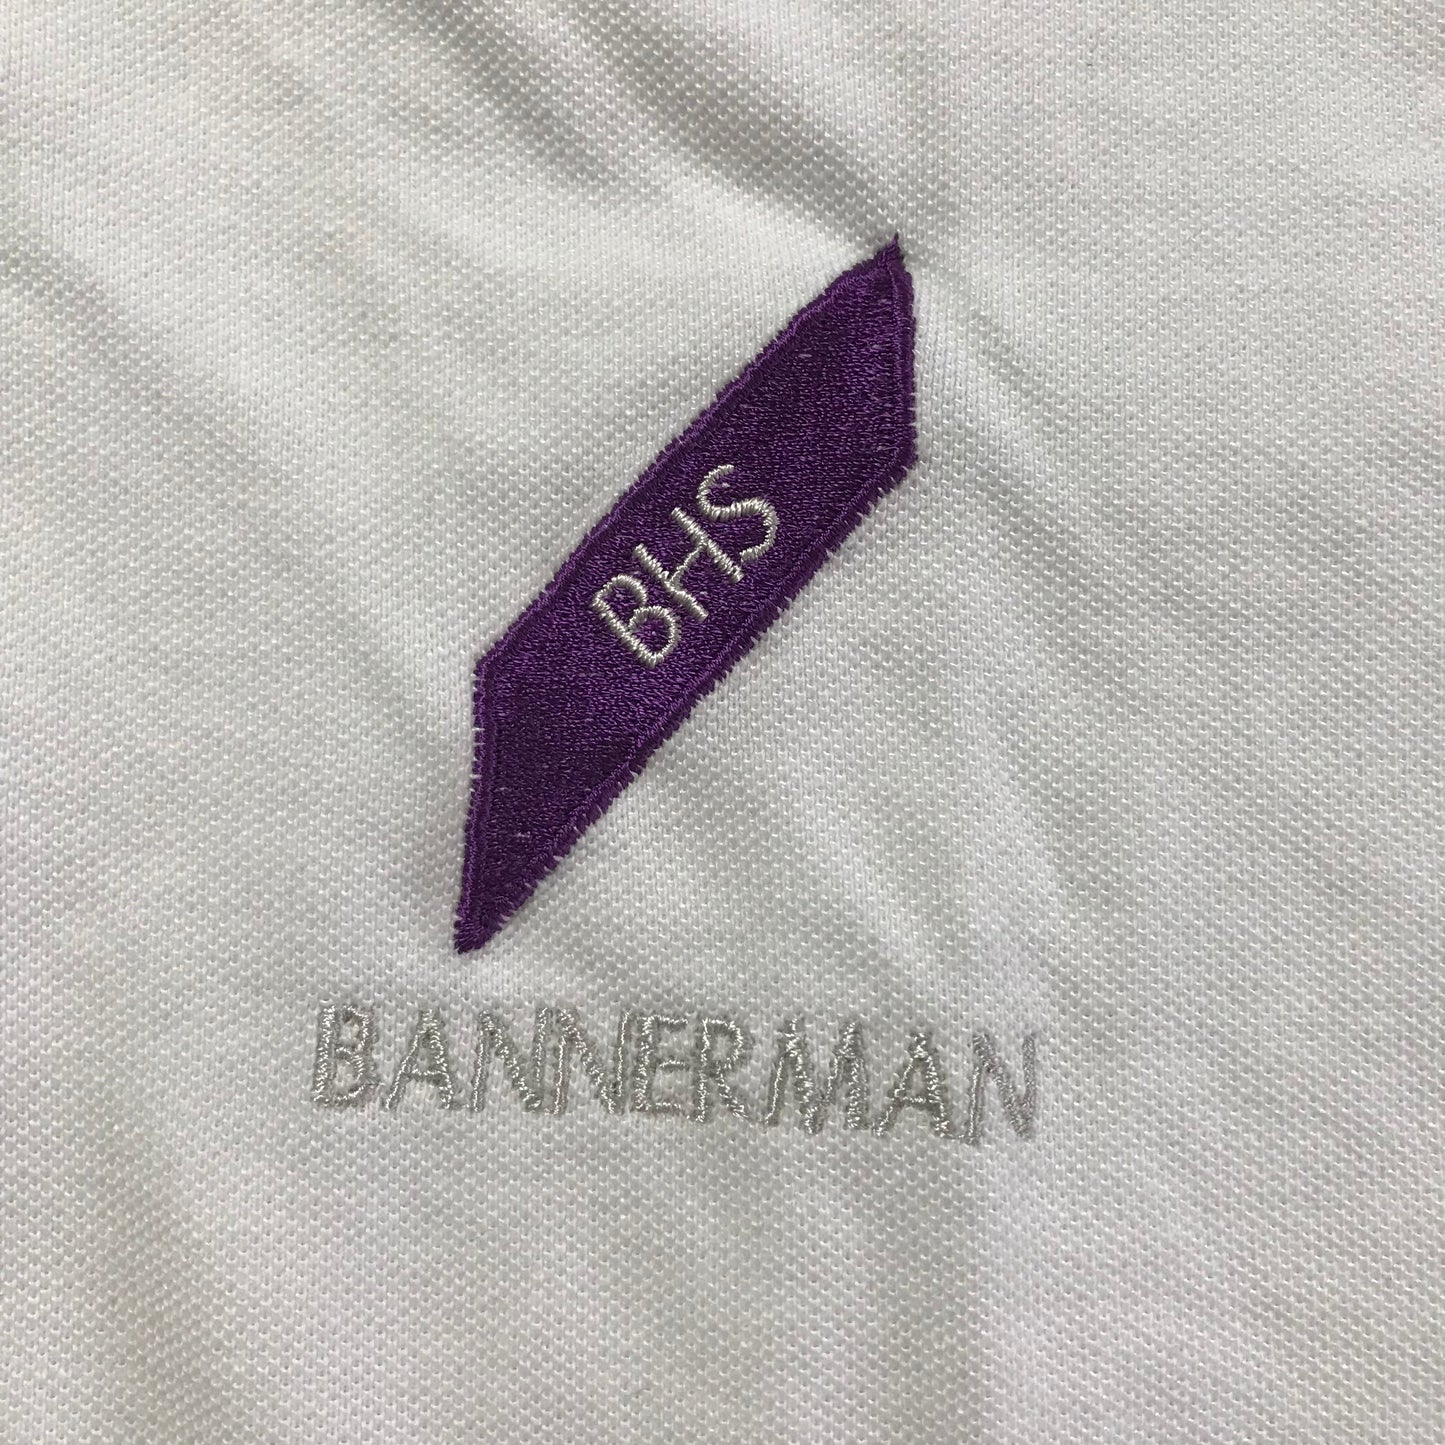 Bannerman High School White Polo Shirt